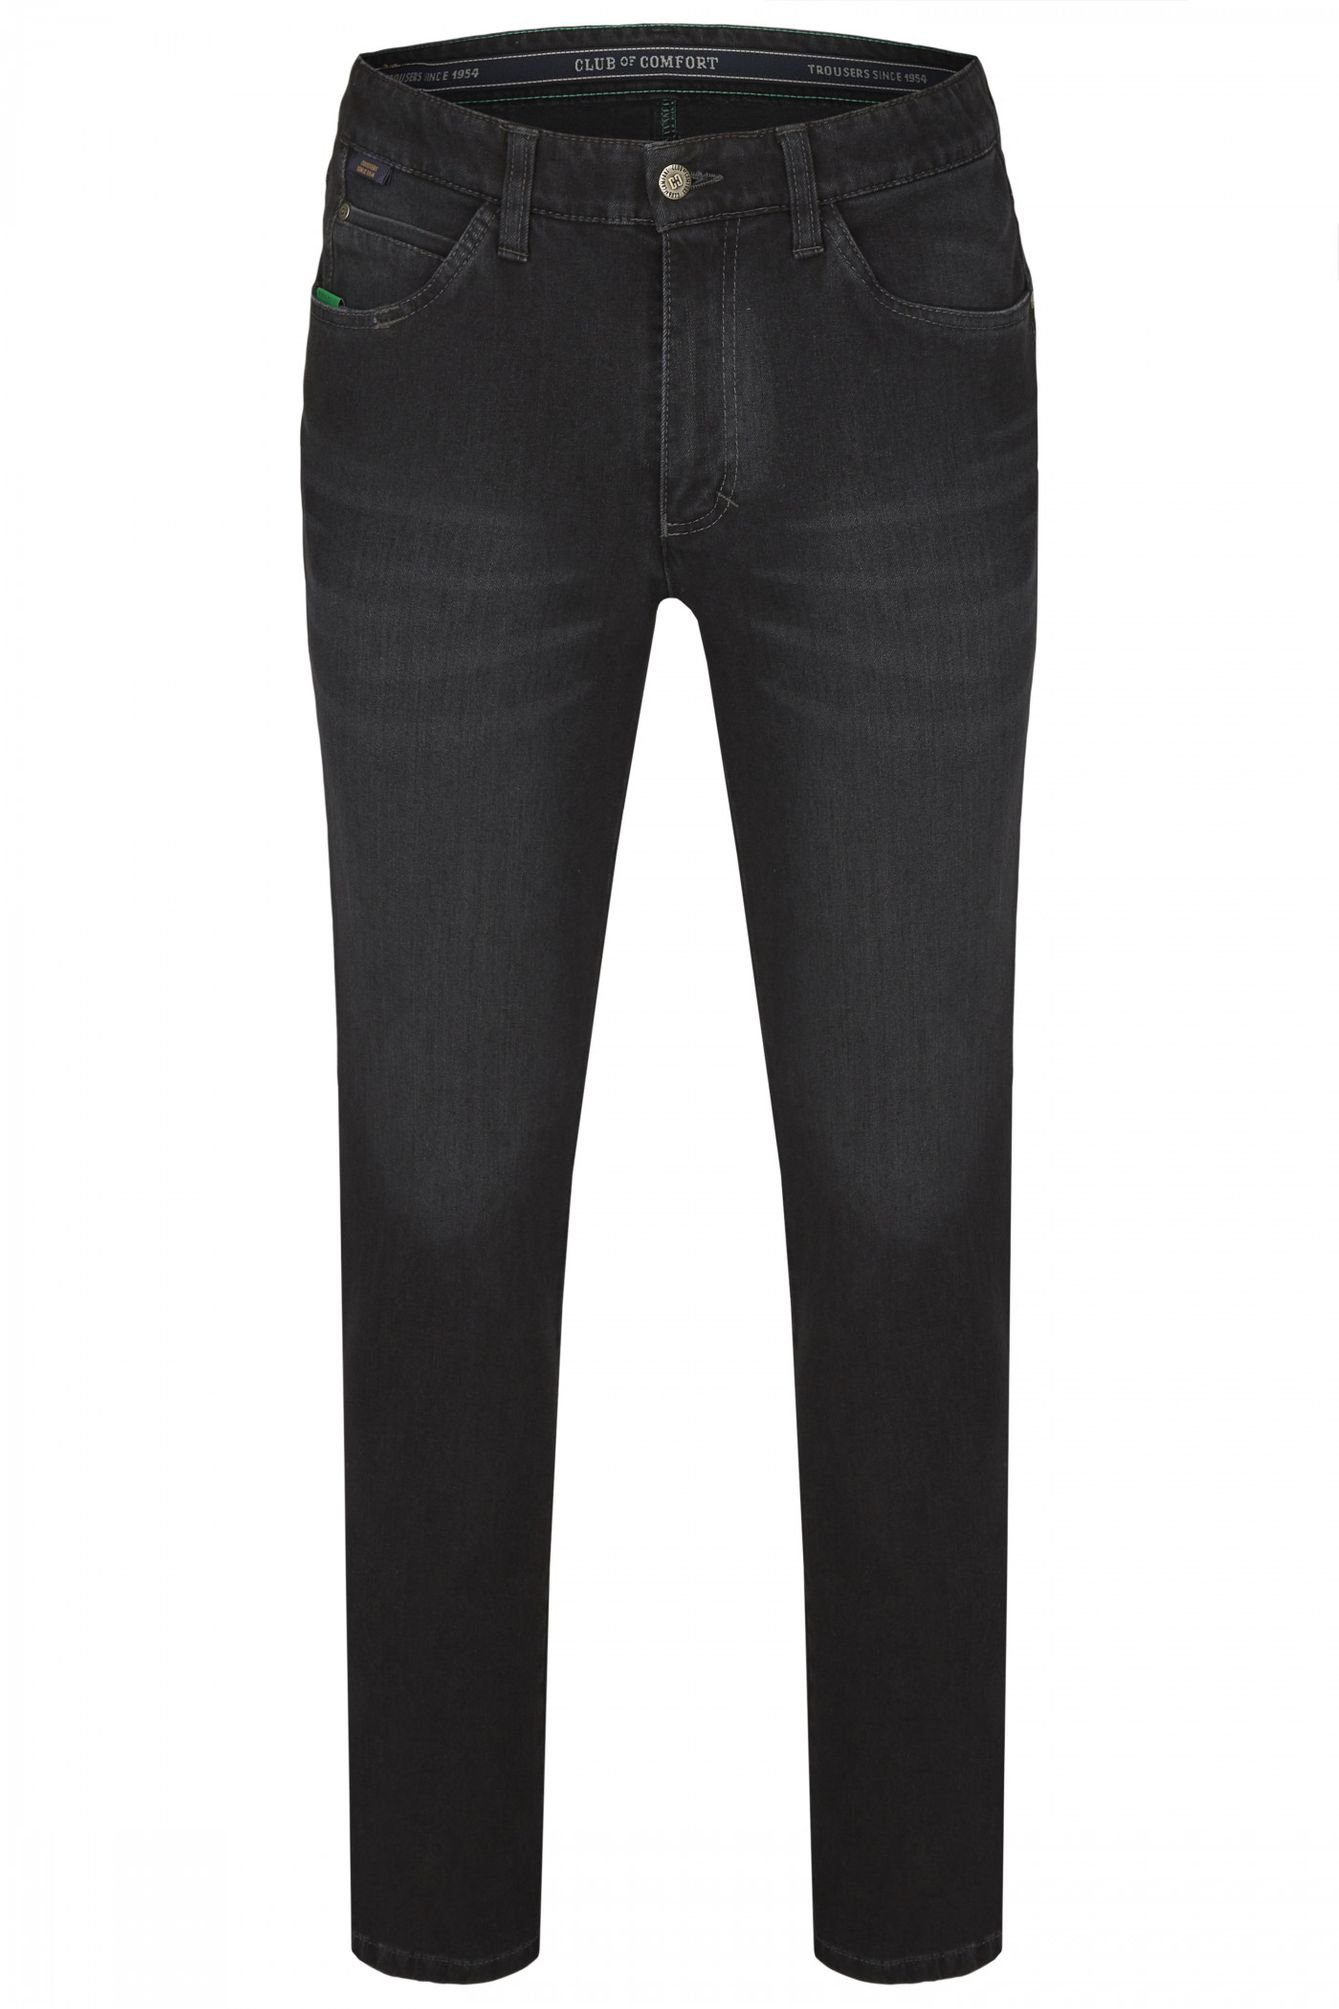 Henry-X of Club (901) dunkelgrau Comfort 5-Pocket-Jeans